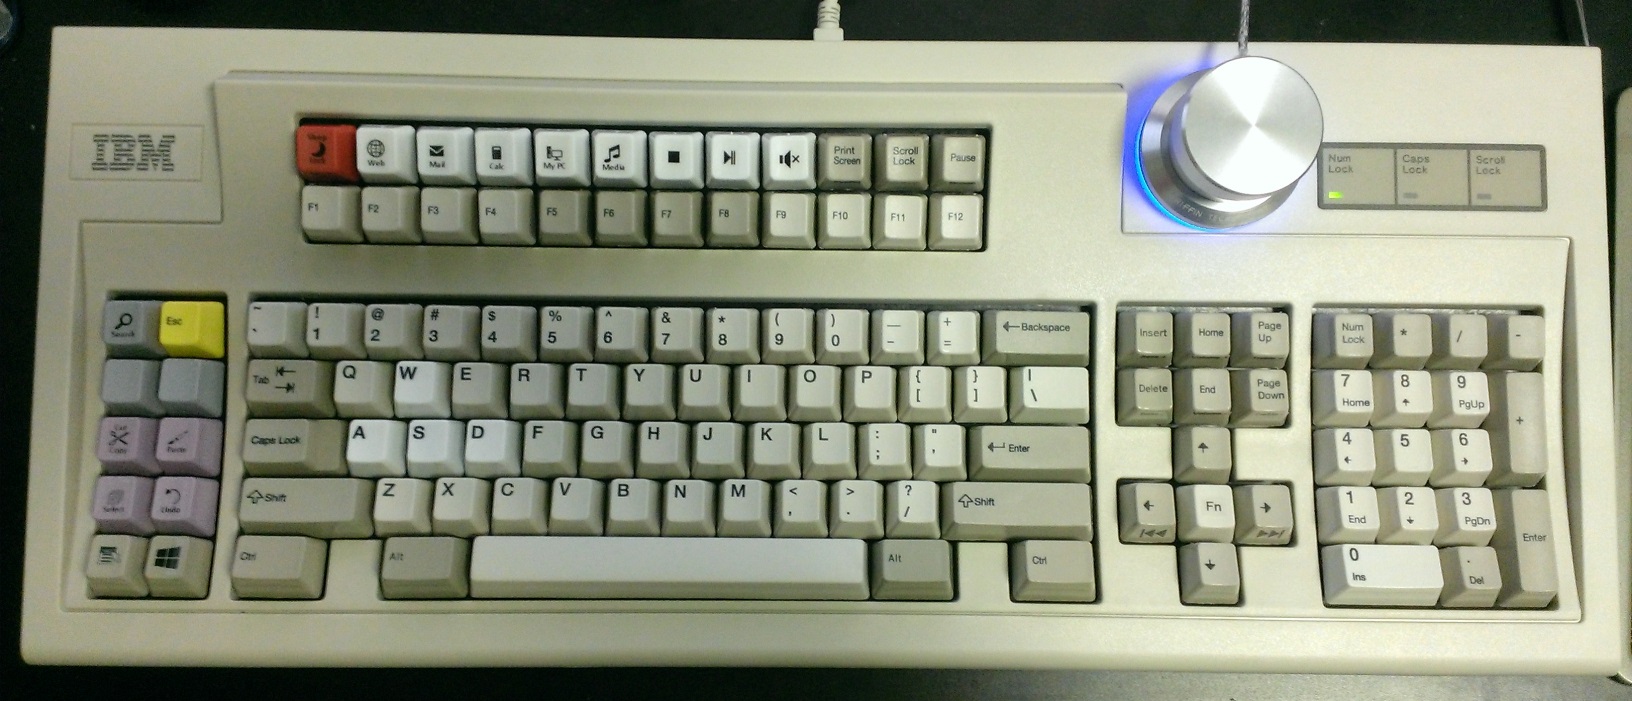 IBM 122 term keyboard conversion #2